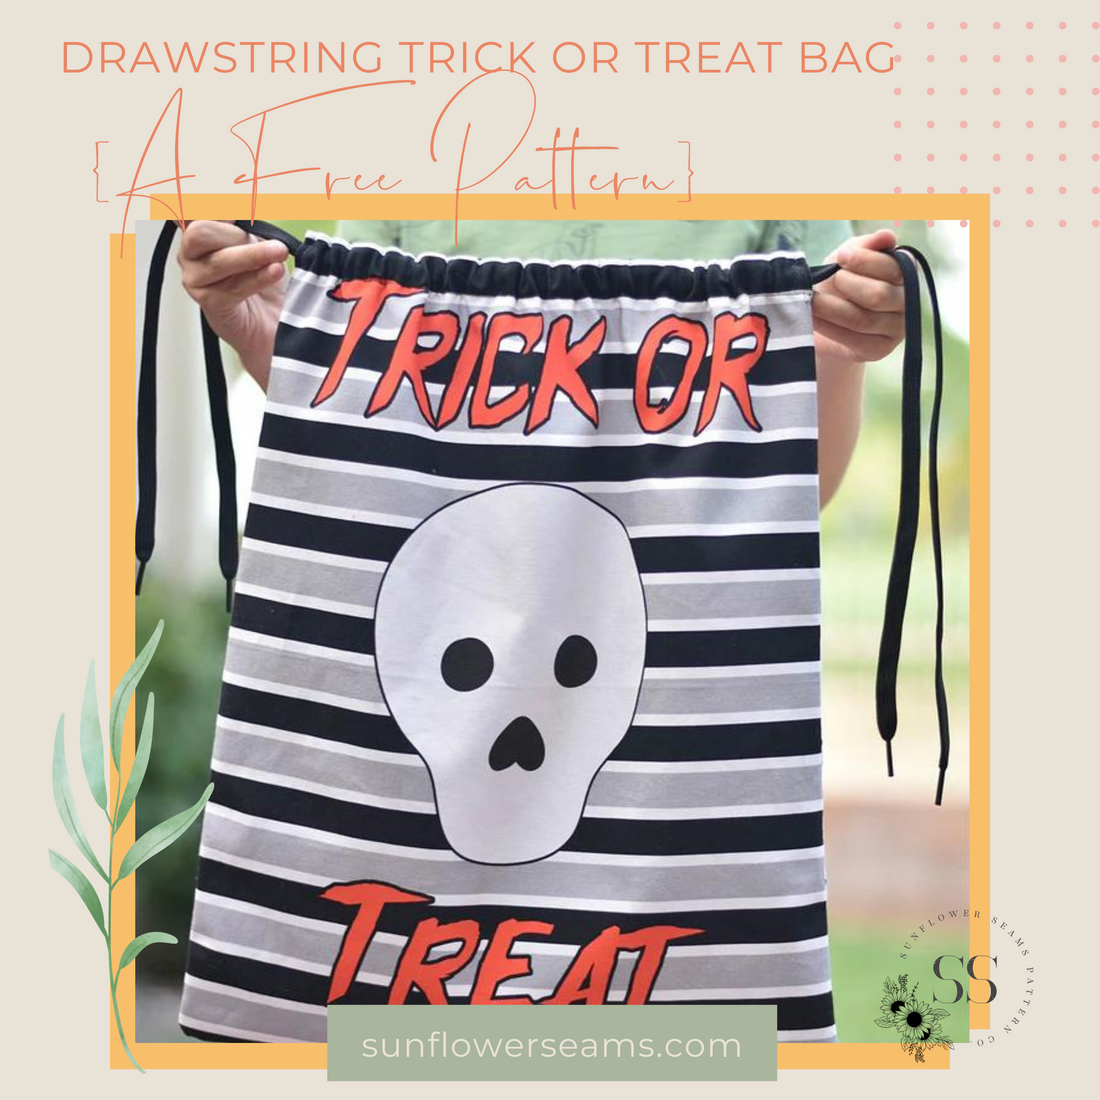 Drawstring Trick or Treat Bag {A FREE Pattern}